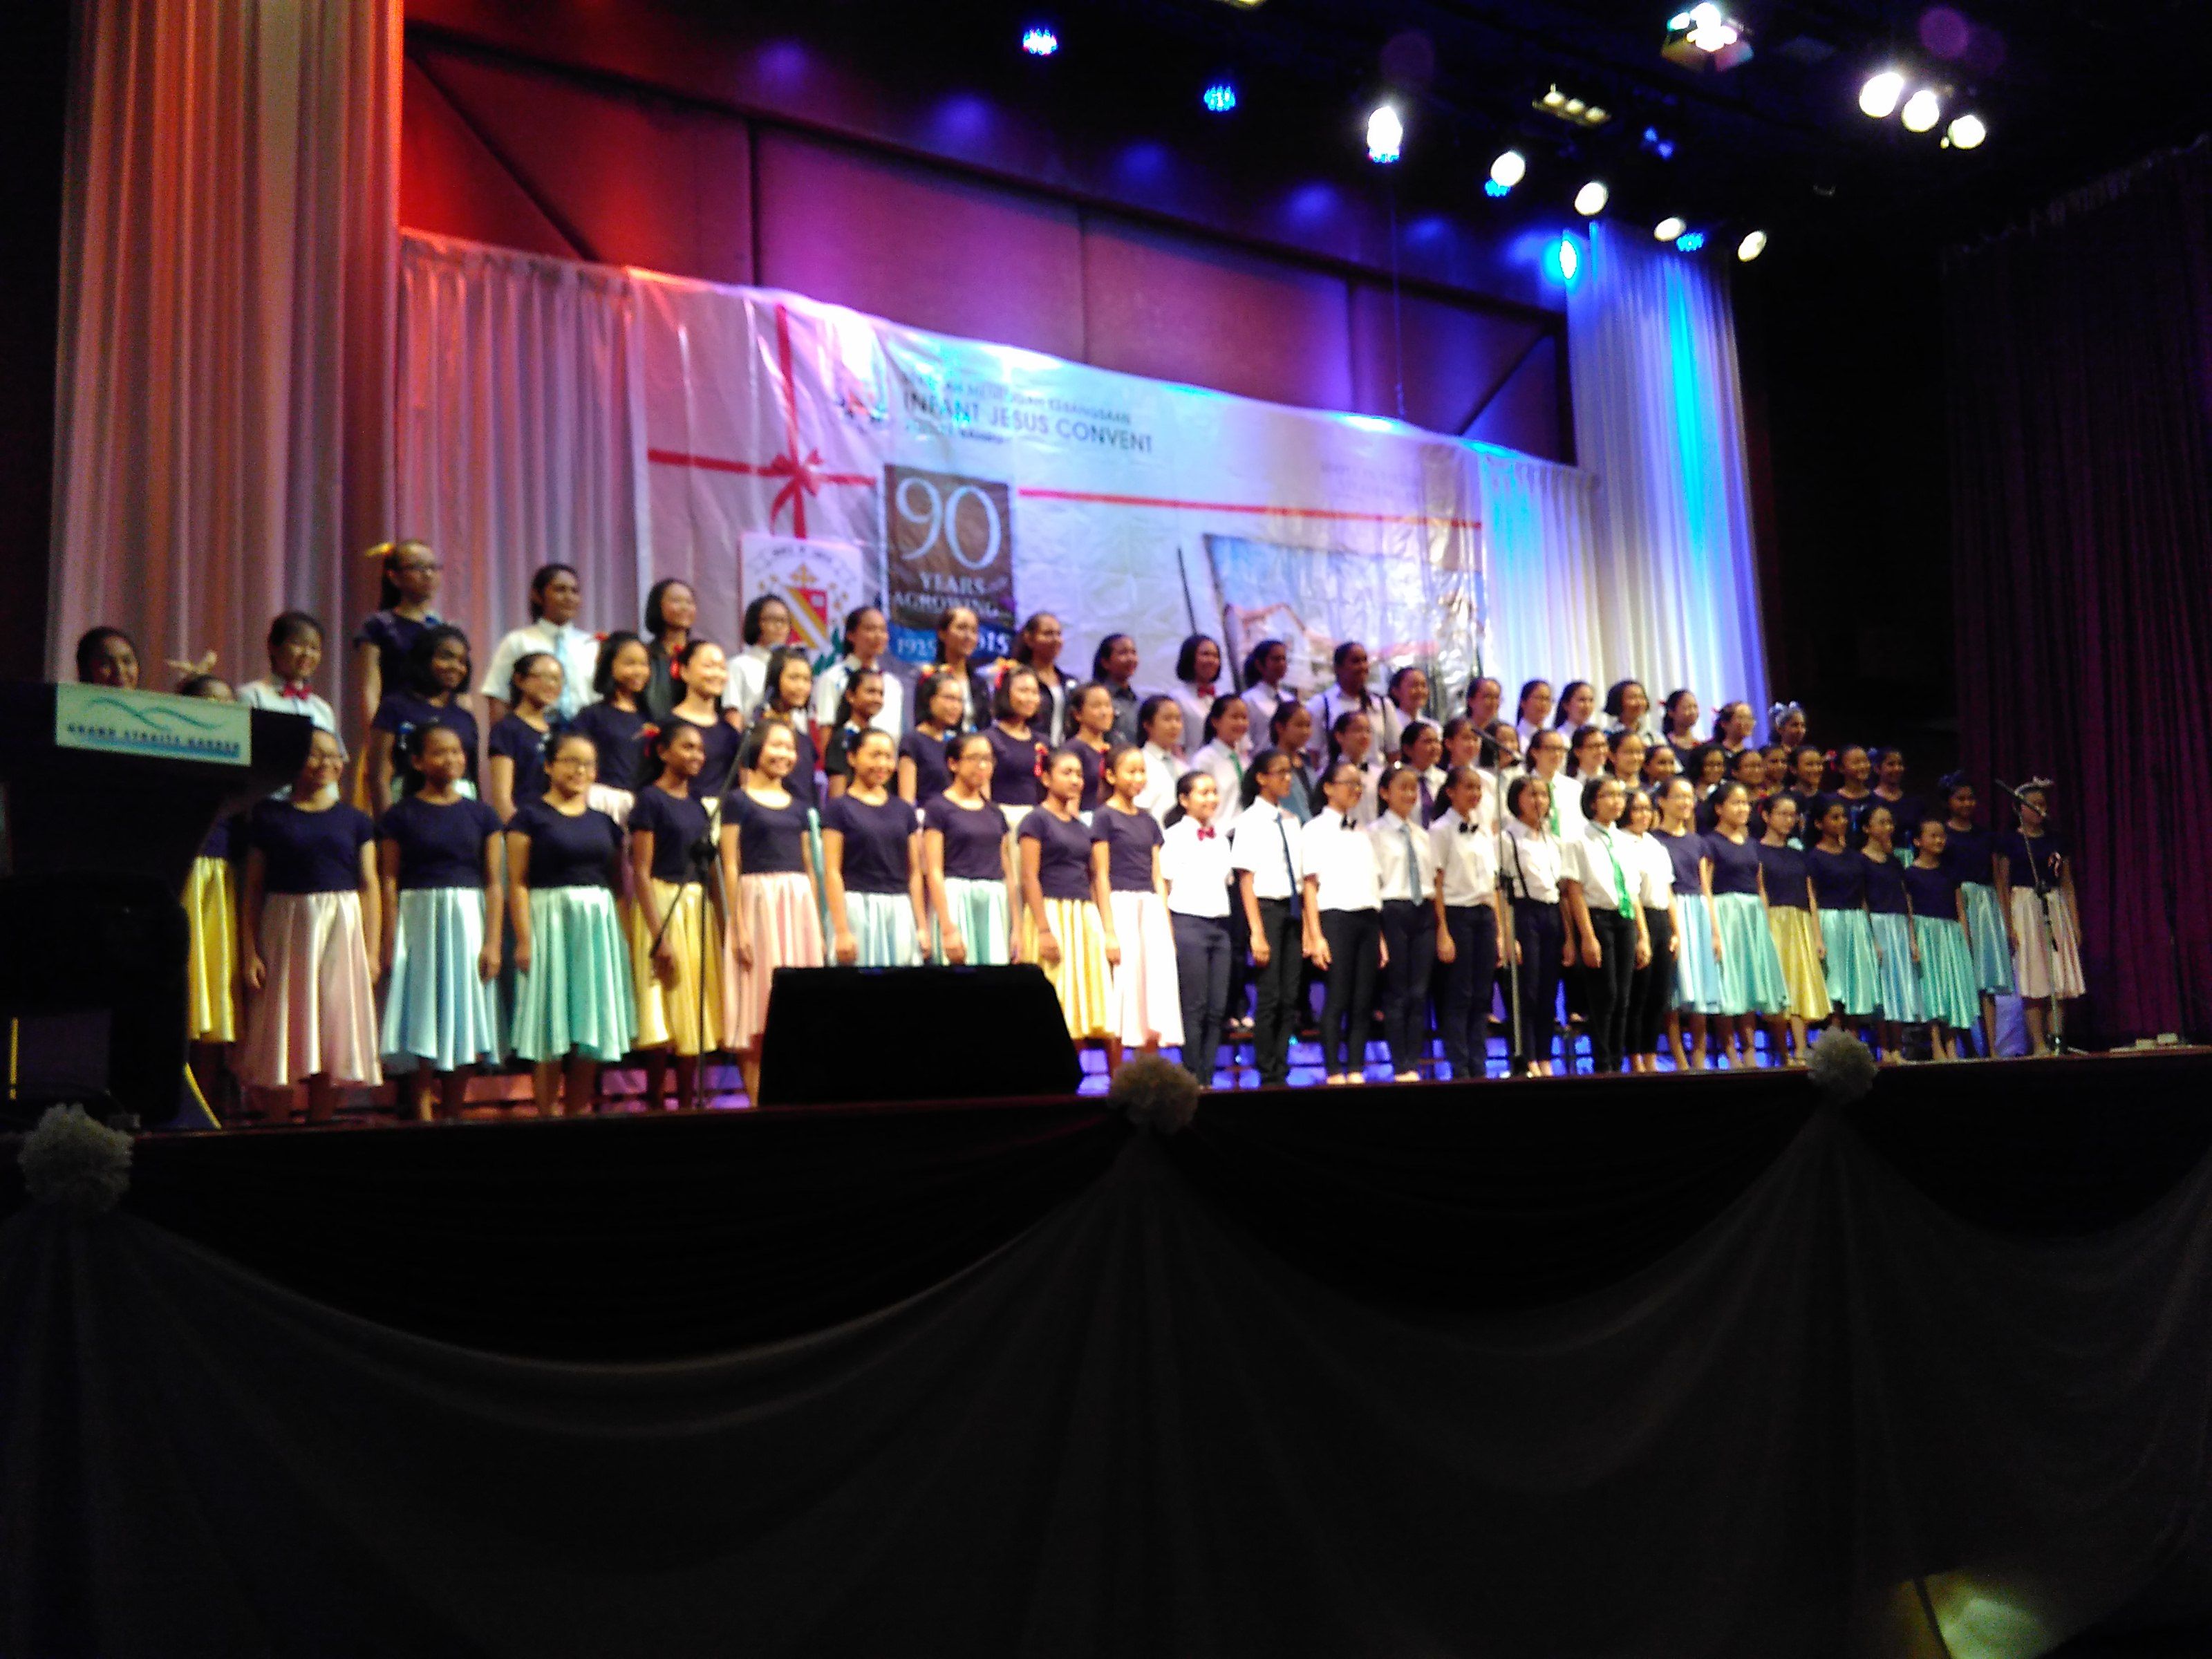 The illustrious choir